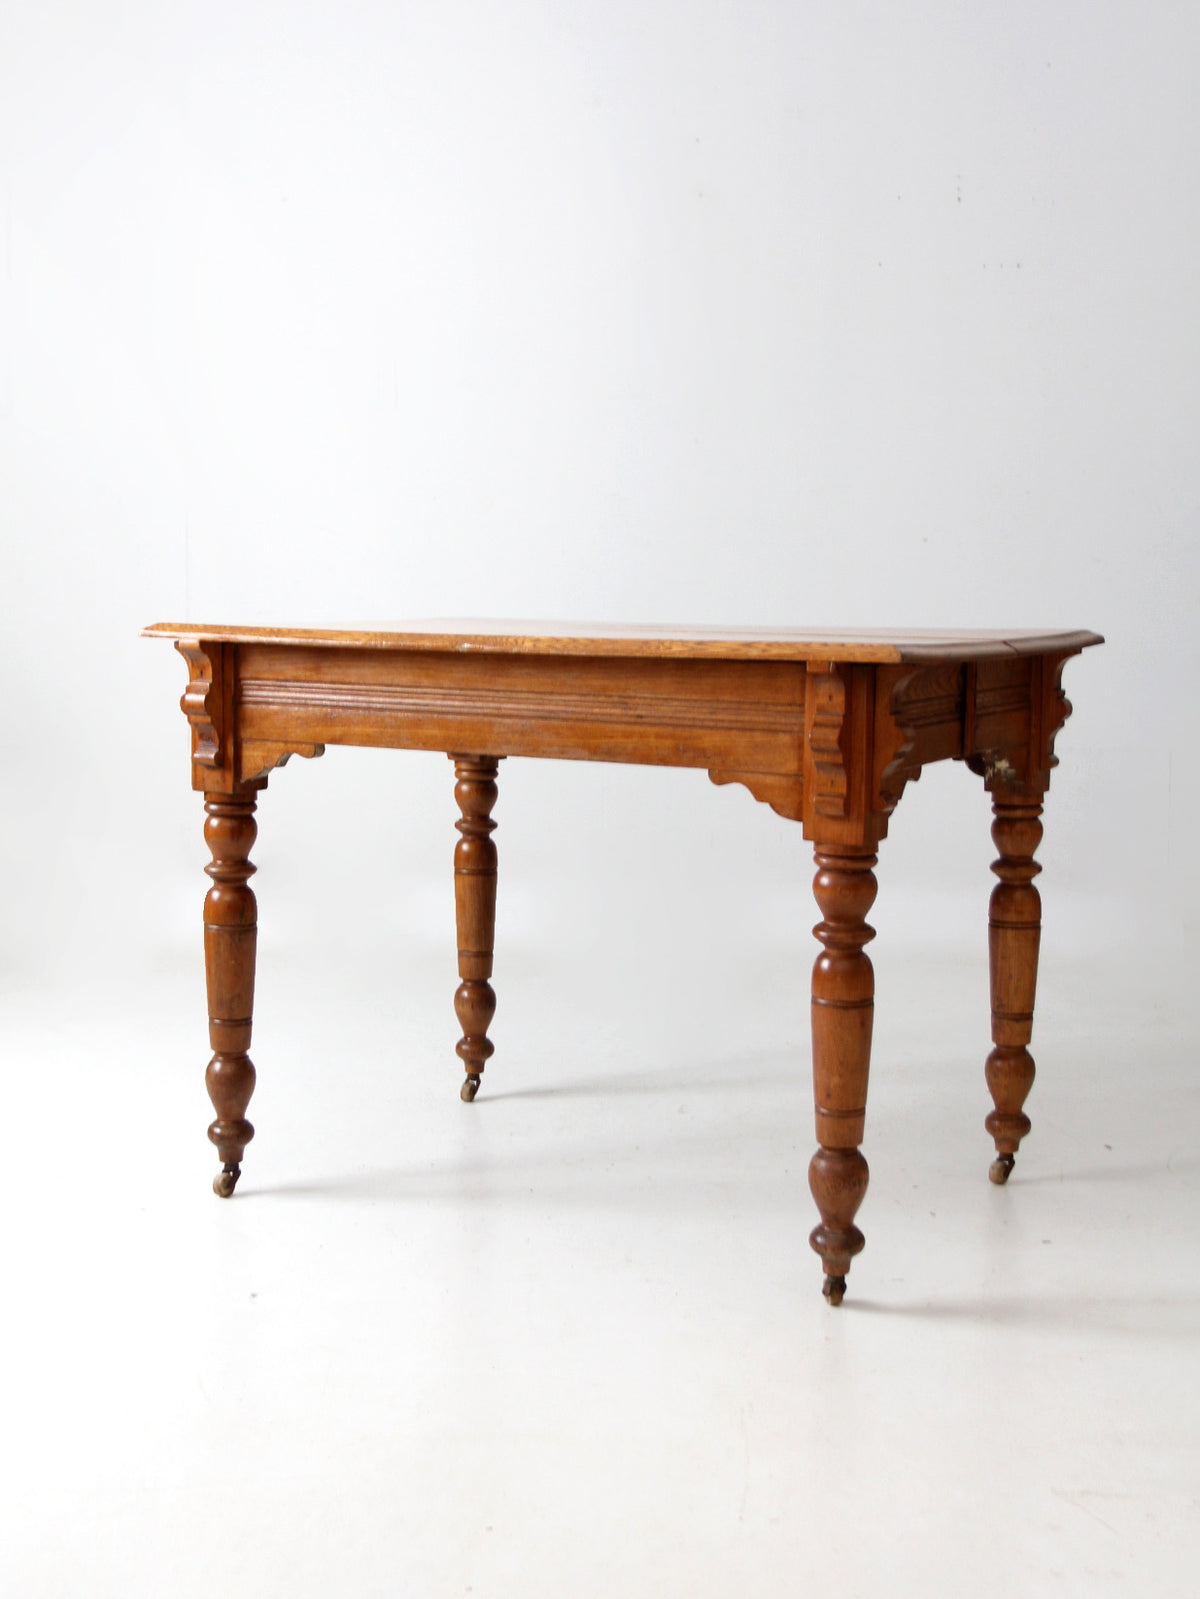 antique wooden farmhouse table